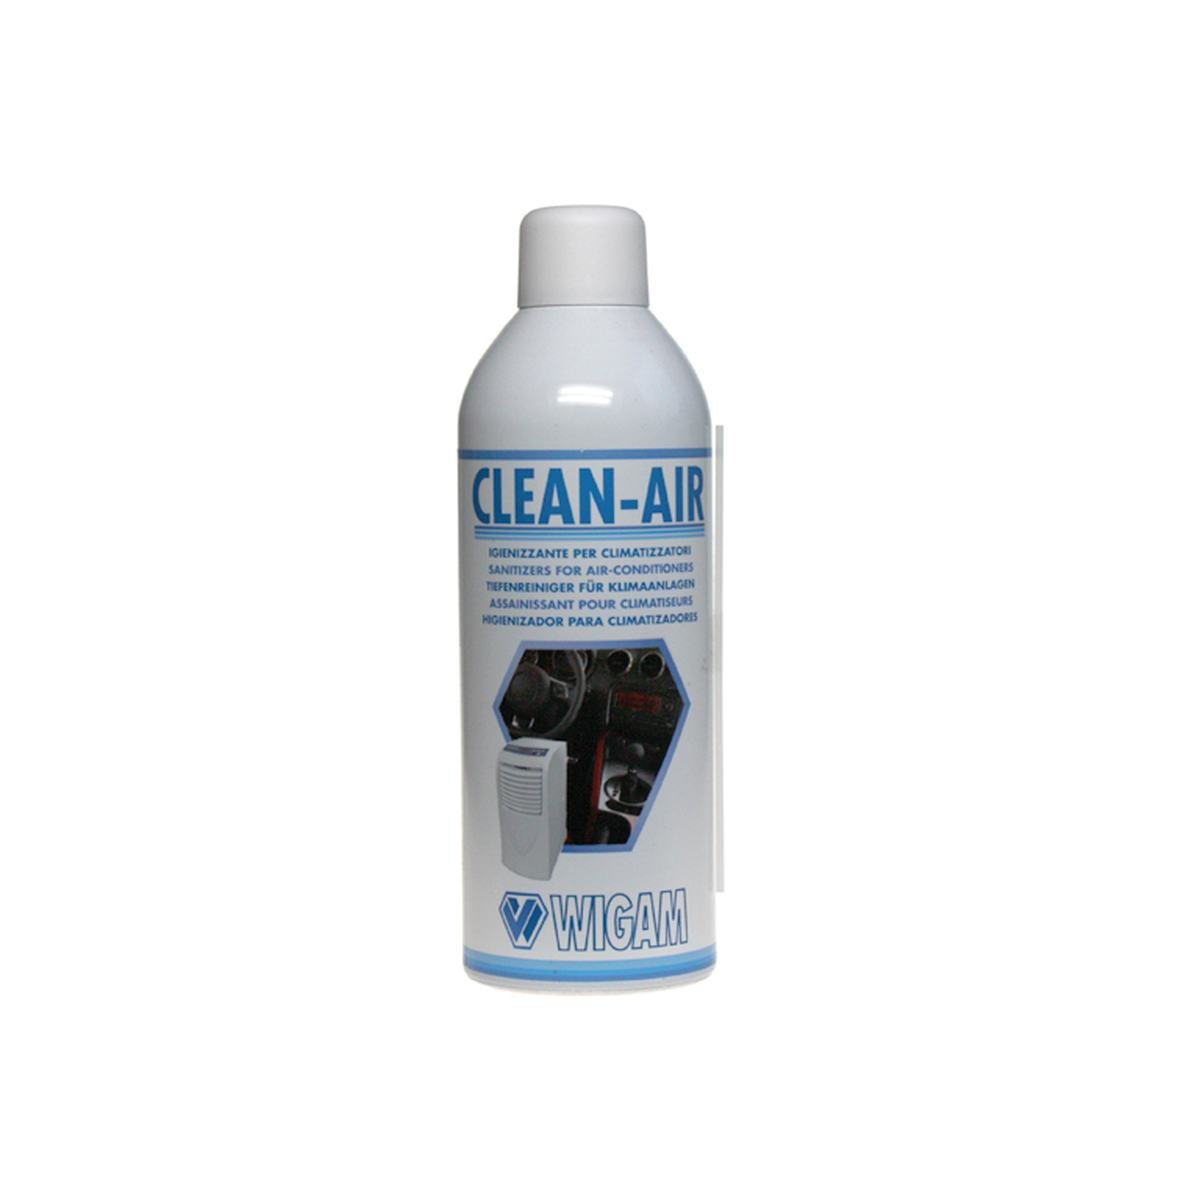 Clean-air desinfektionsspray på boks med 400 ml.